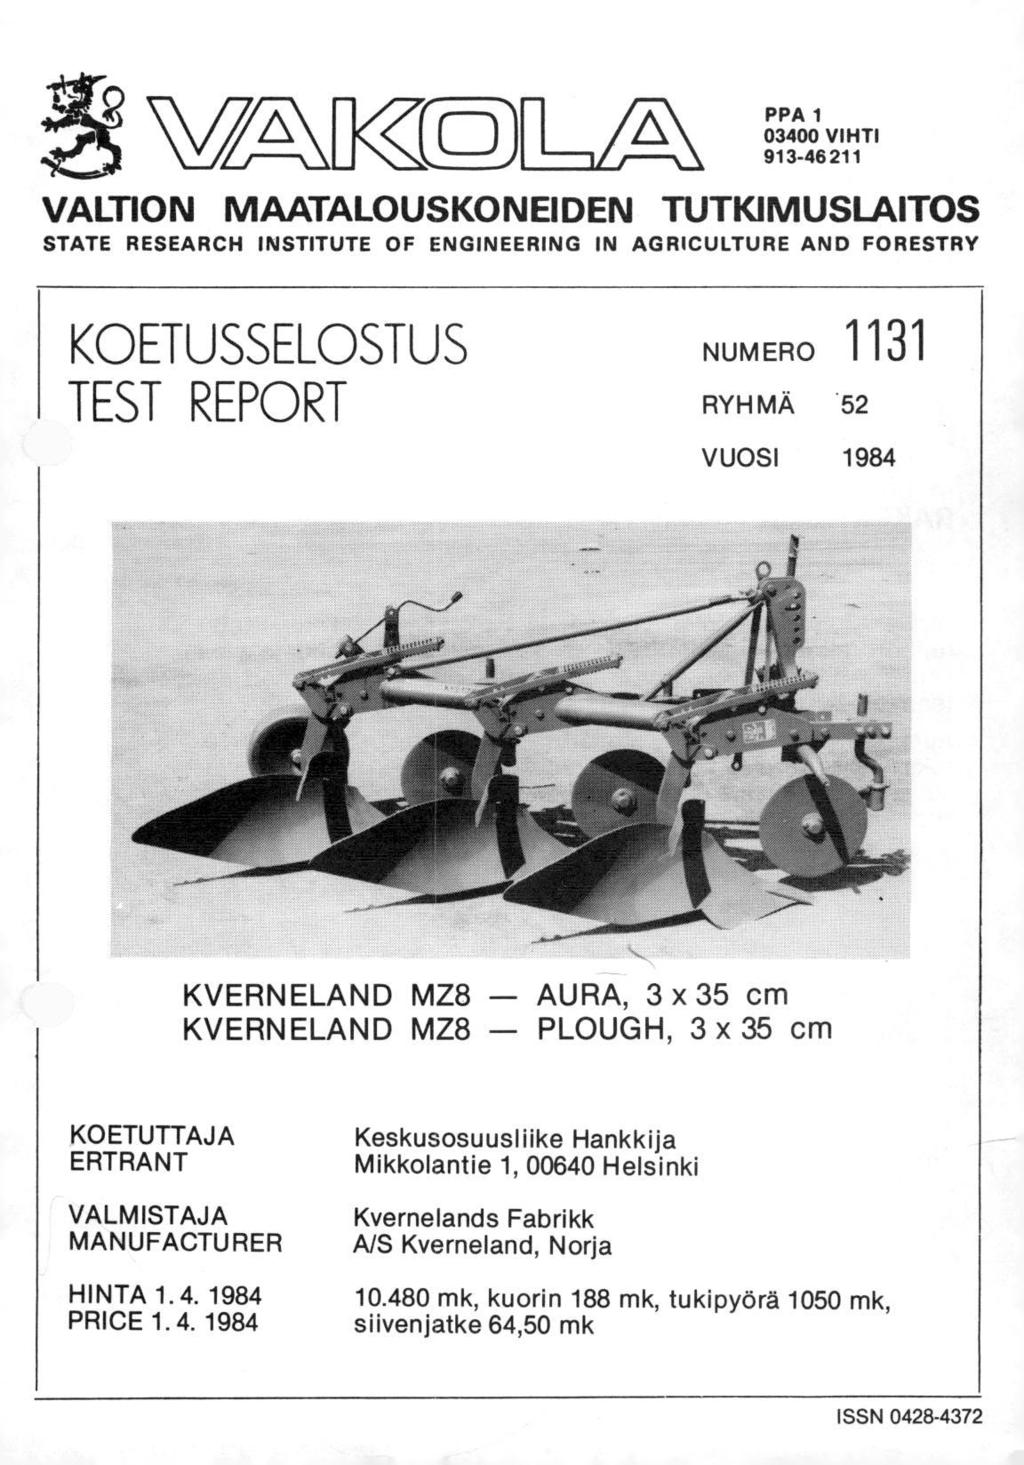 vz-uic(n: PPA 1 03400 VIHTI 913-46211 VALTION MAATALOUSKONEIDEN TUTKIMUSLAITOS STATE RESEARCH INSTITUTE OF ENGINEERING IN AGRICULTURE AND FORESTRY KOETUSSELOSTUS TEST REPORT NUMERO 1131 RYHMÄ 52